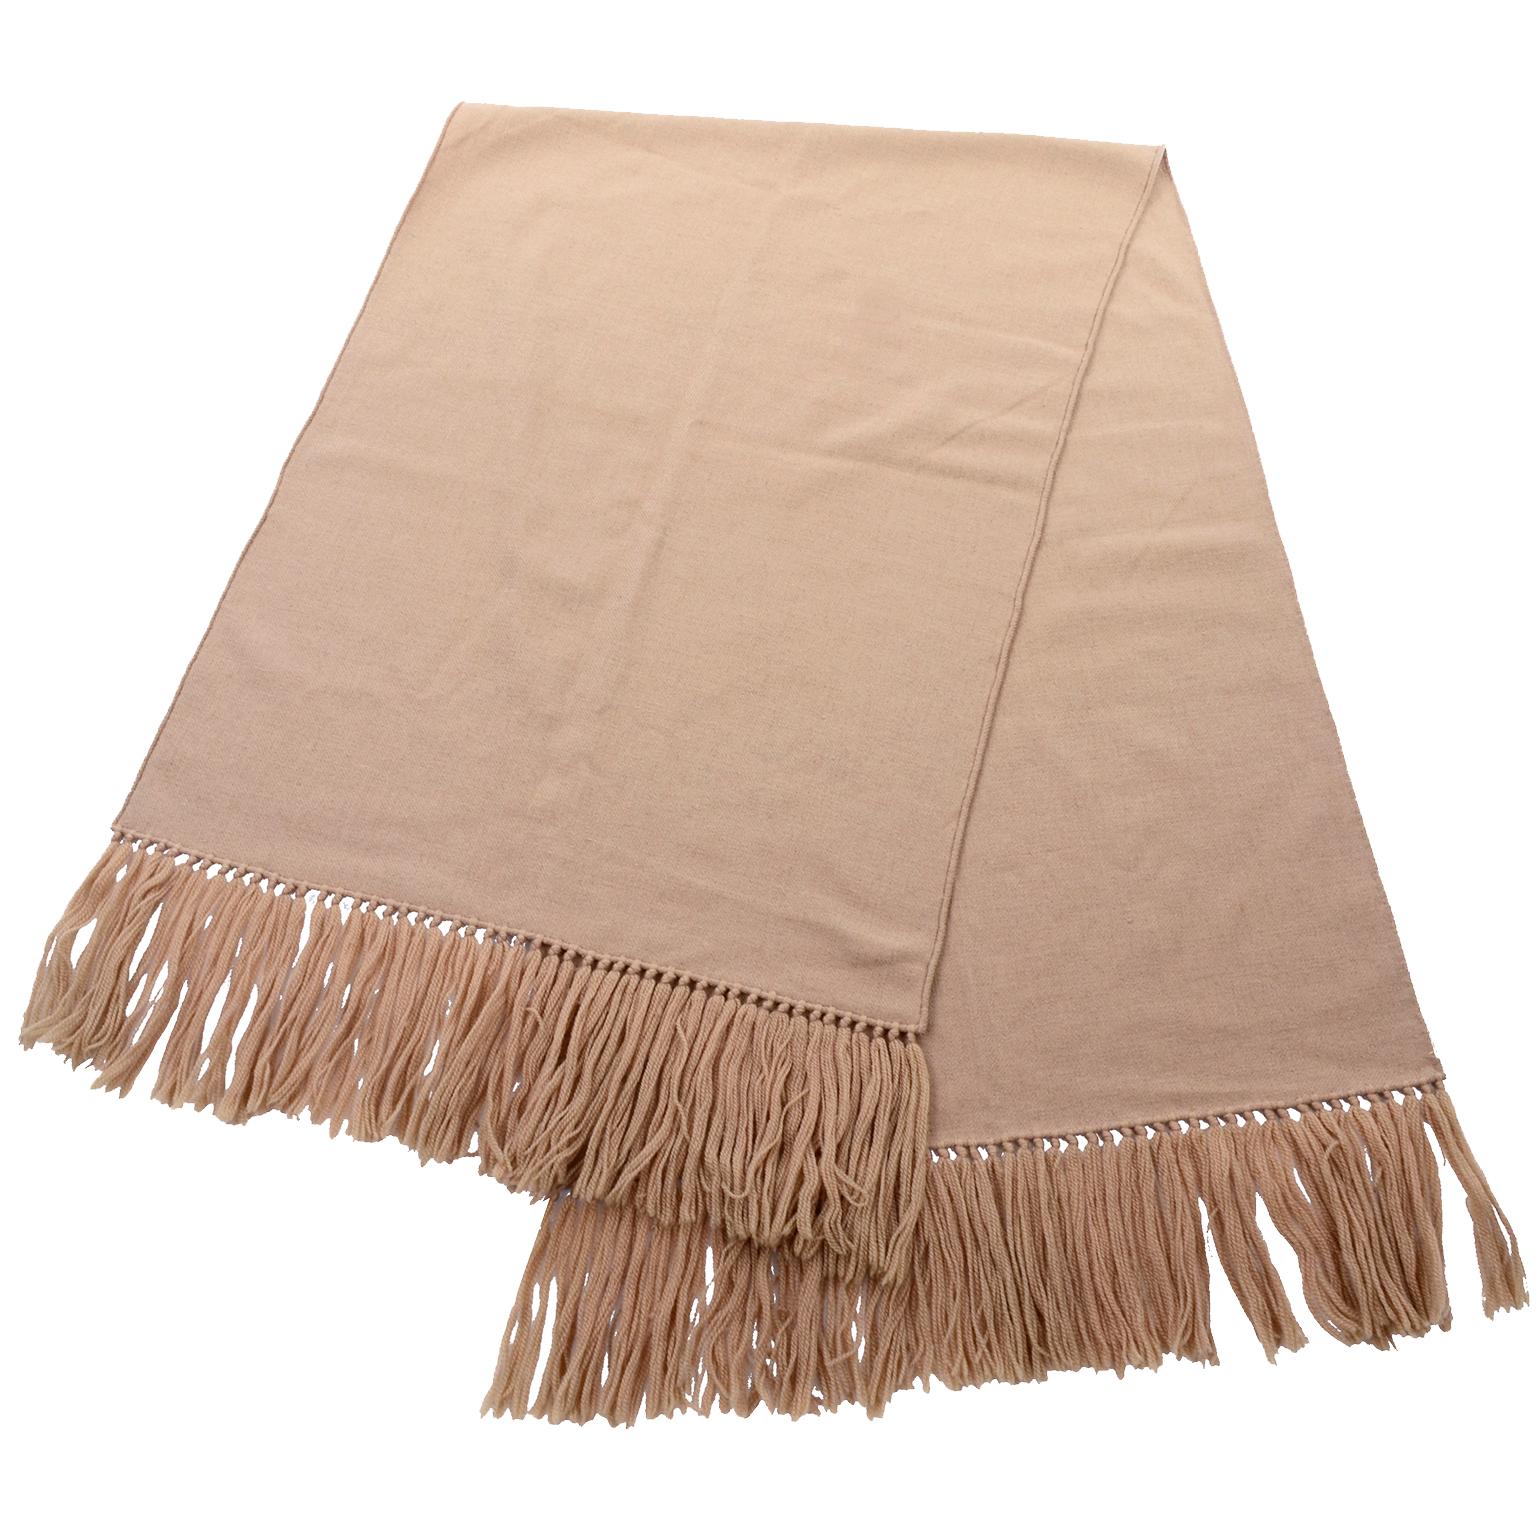 Women's or Men's Vintage Camel Wool Blanket Scarf or Wrap With Tassels